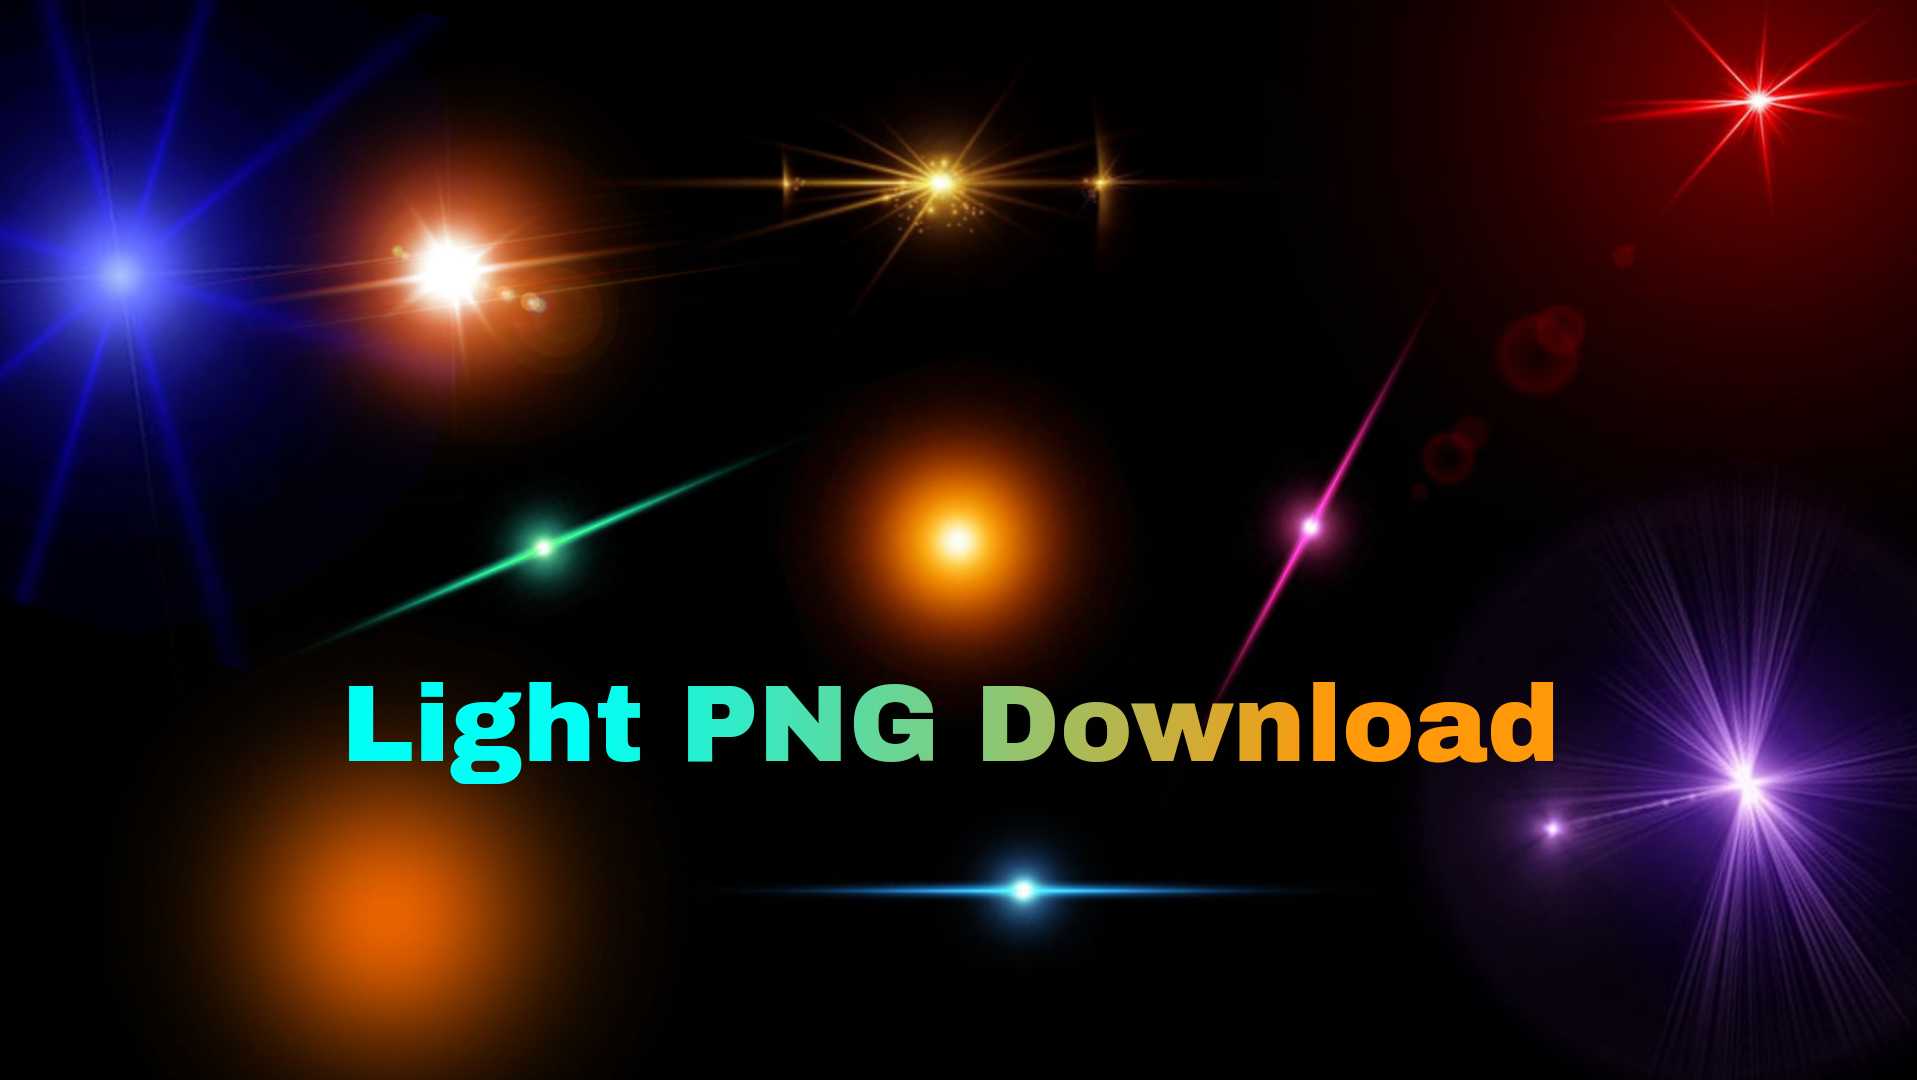 Light Png zip file Download